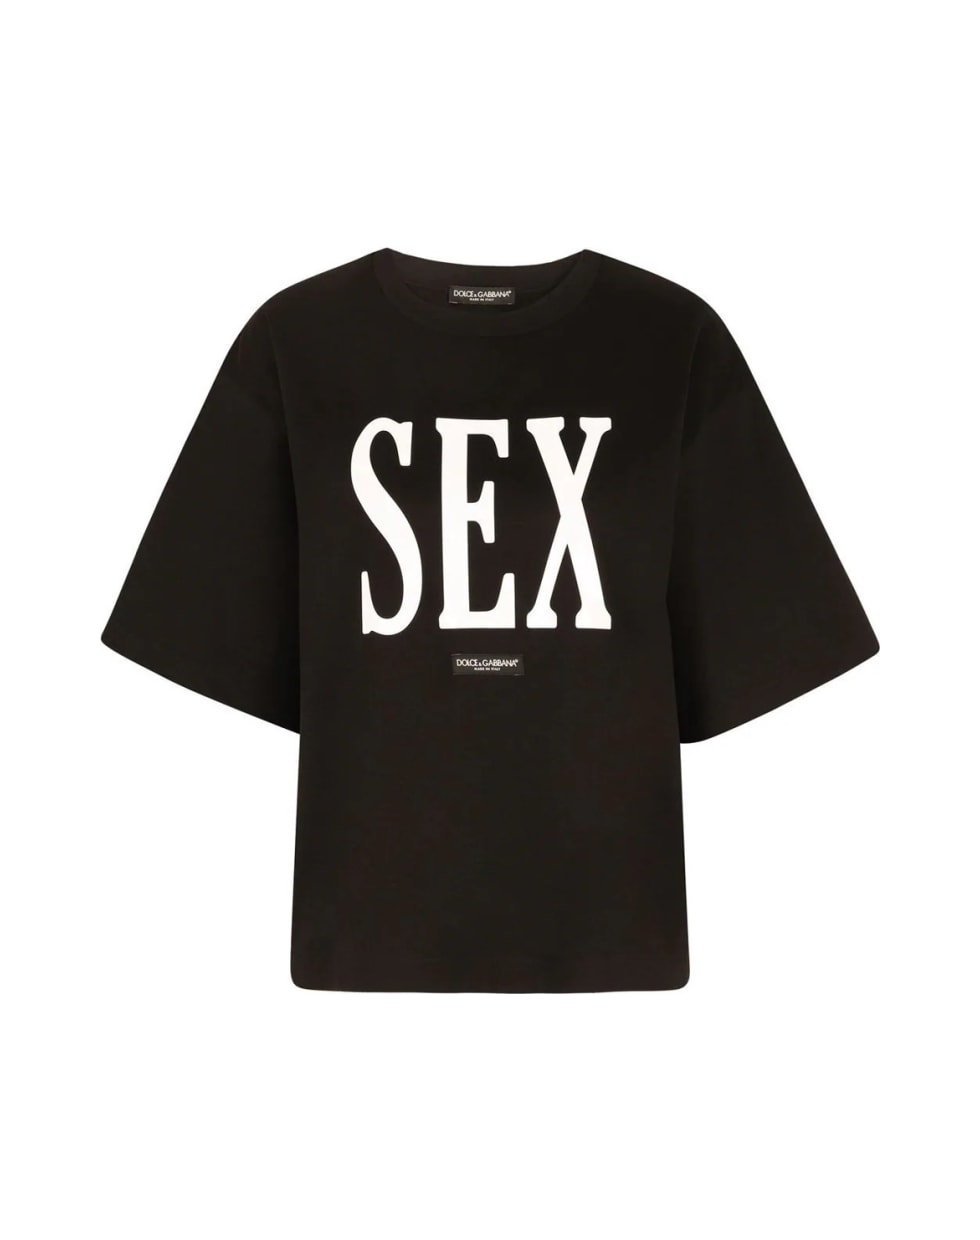 Dolce & Gabbana Sekx Tshirt - Black